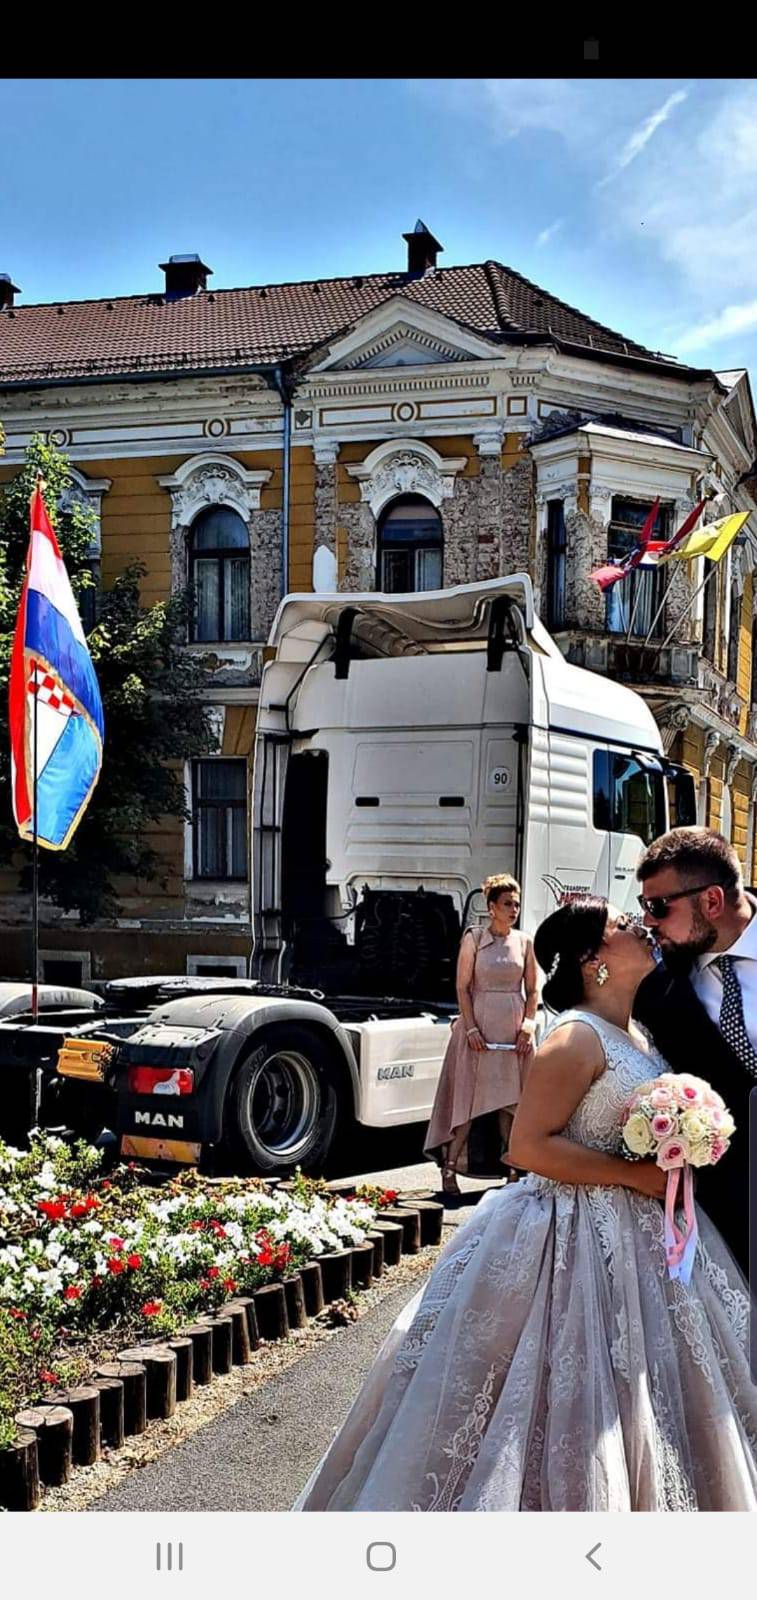 Punim gasom u brak: Dragu odveo u kamionu pred oltar